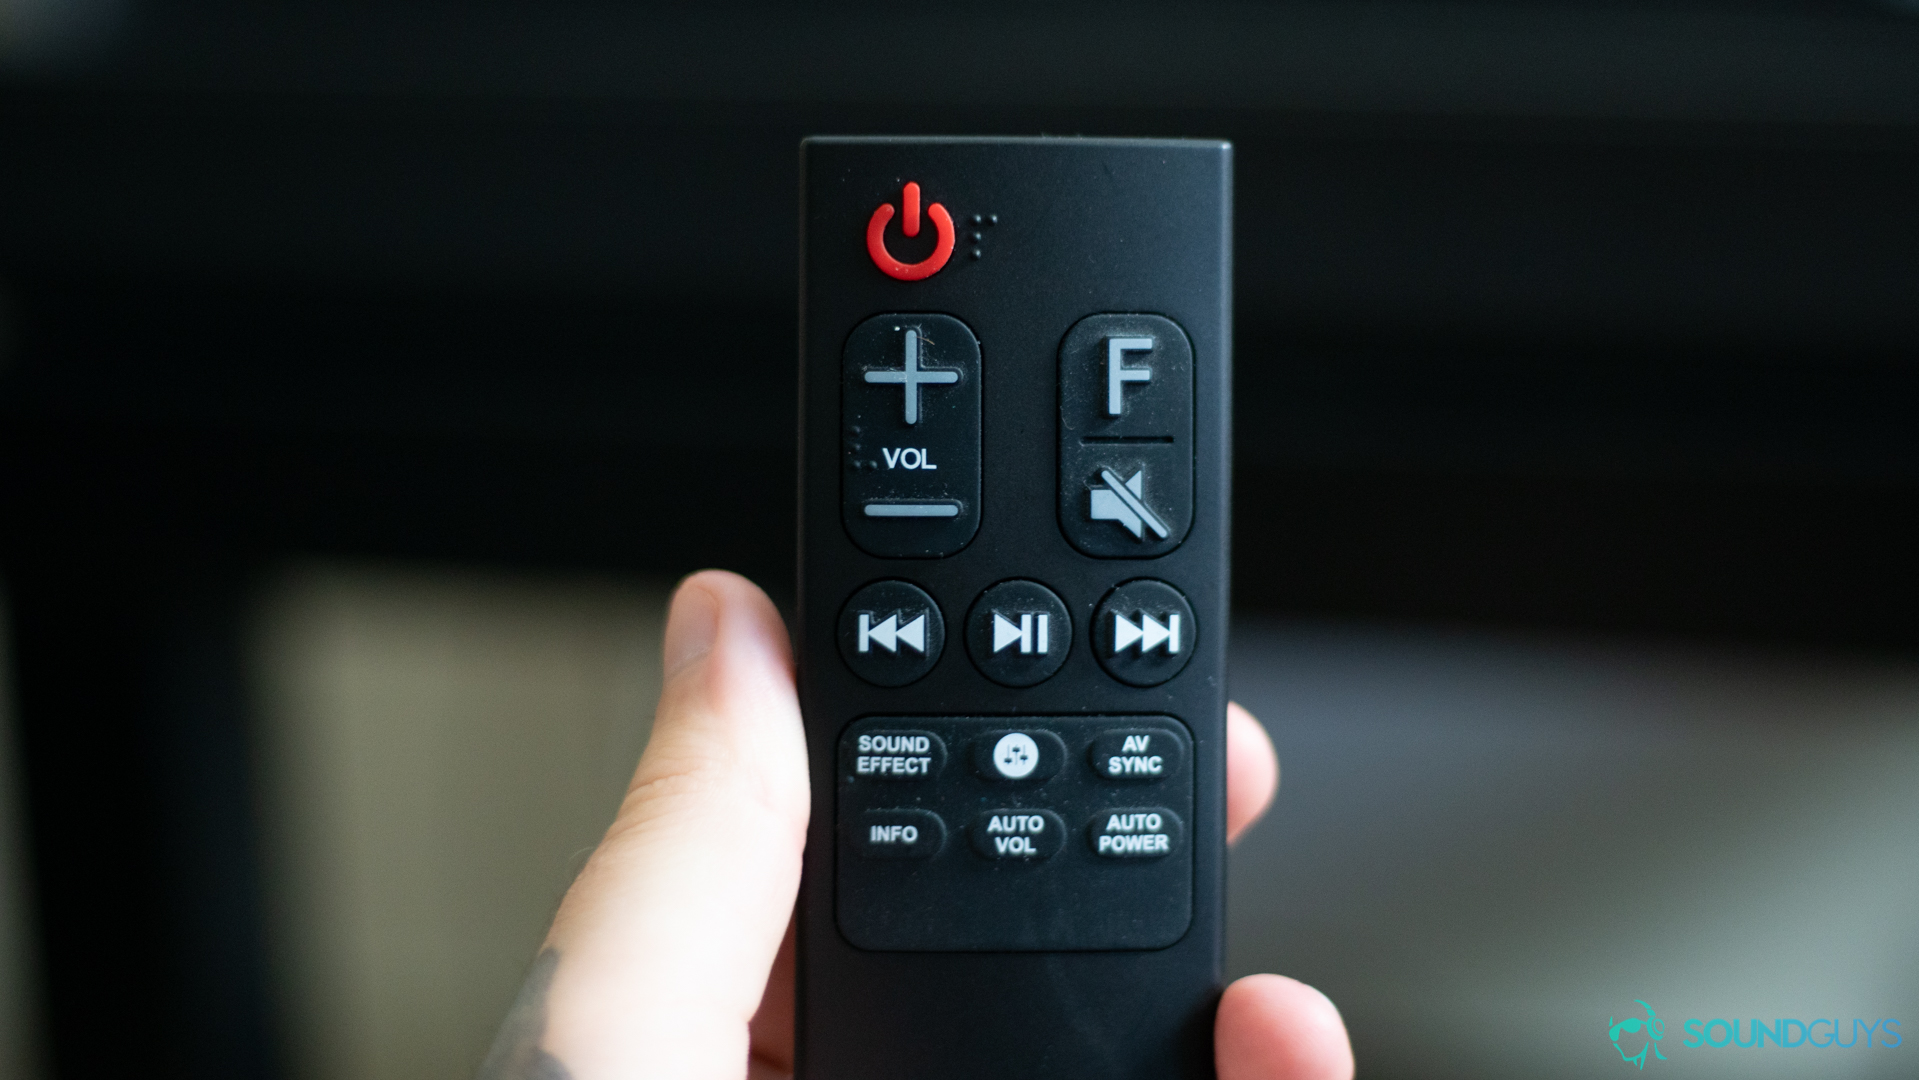 The remote to the LG soundbar. 